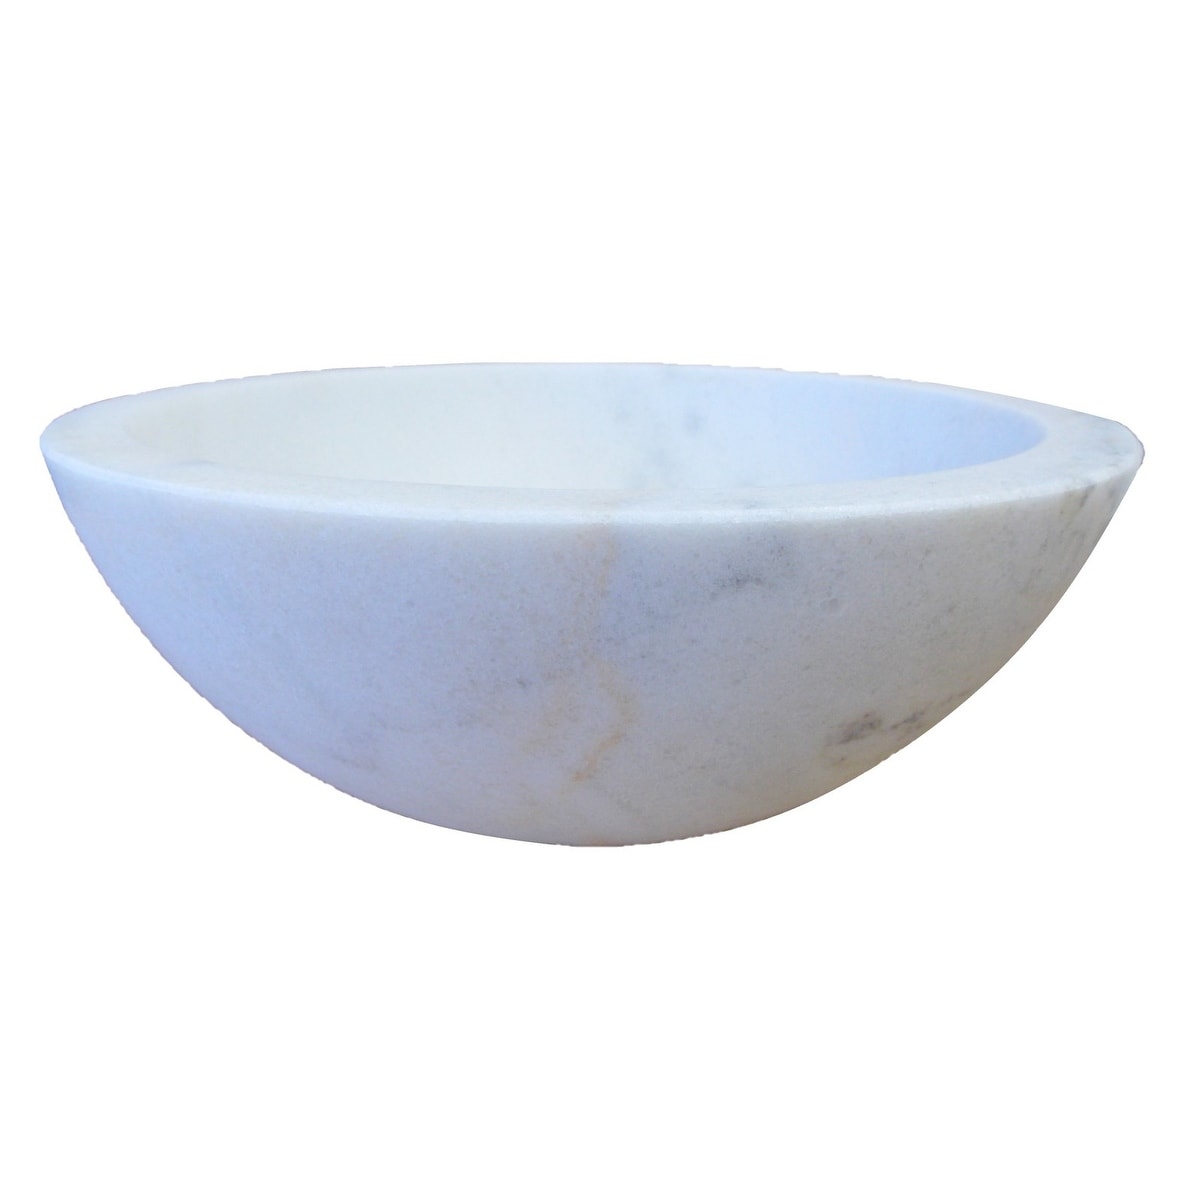 Eden Bath Small Vessel Sink Bowl Honed White Marble